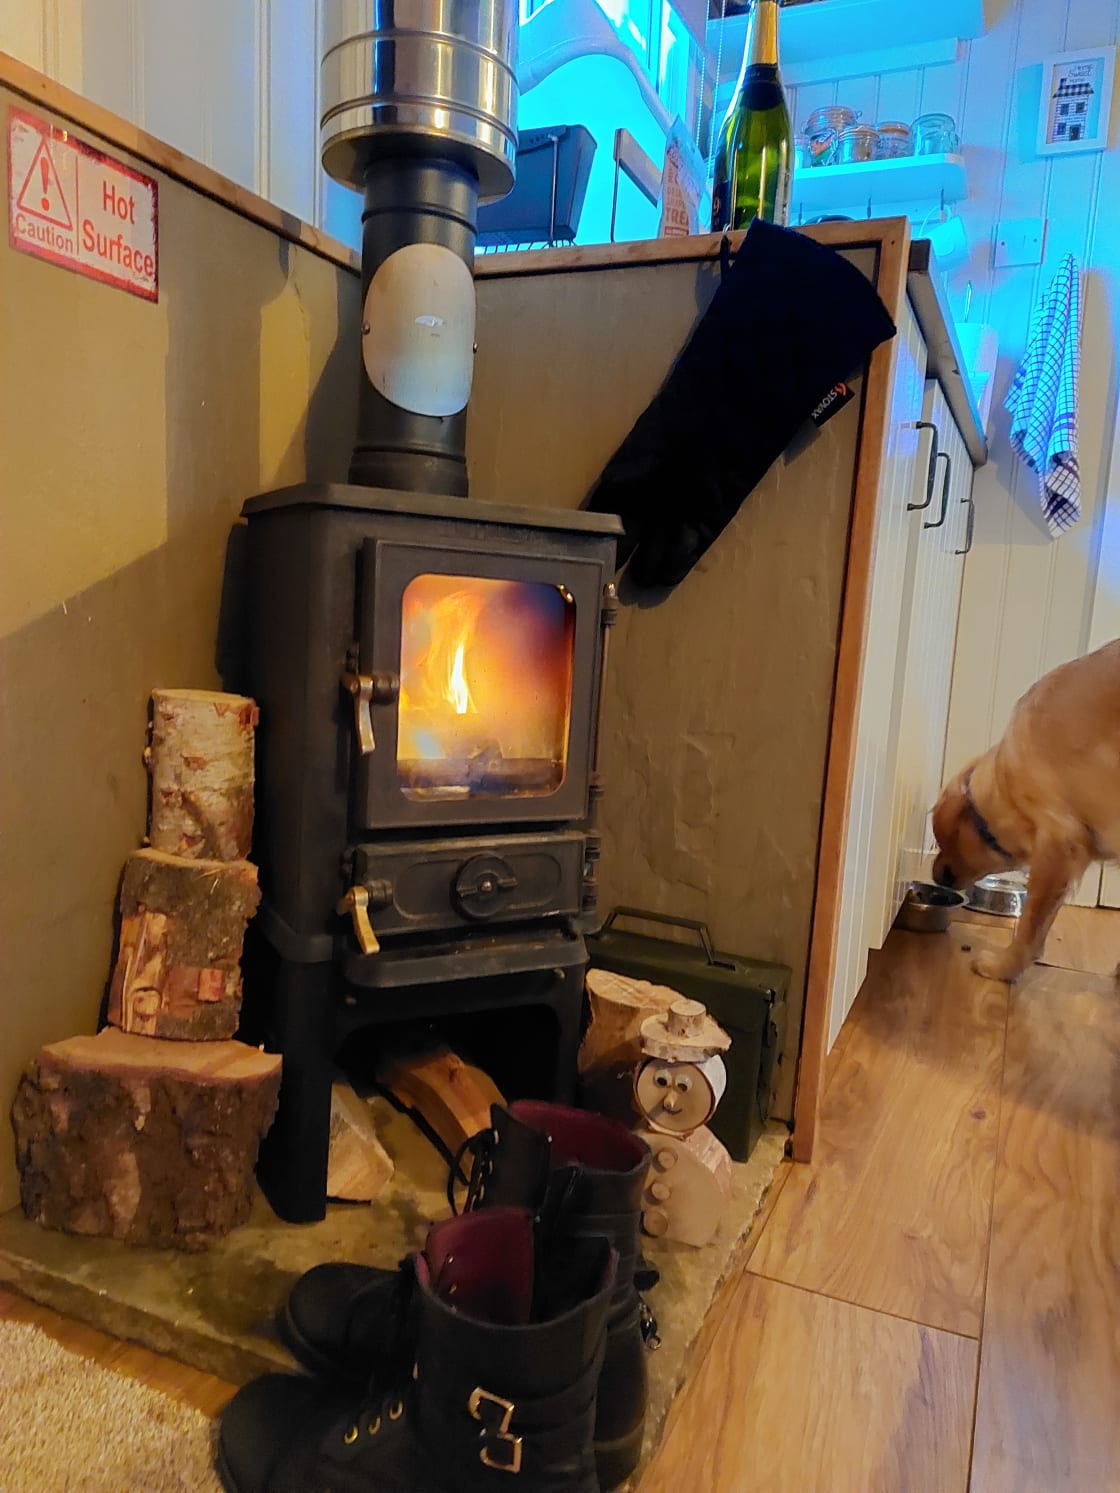 Log burner in hut